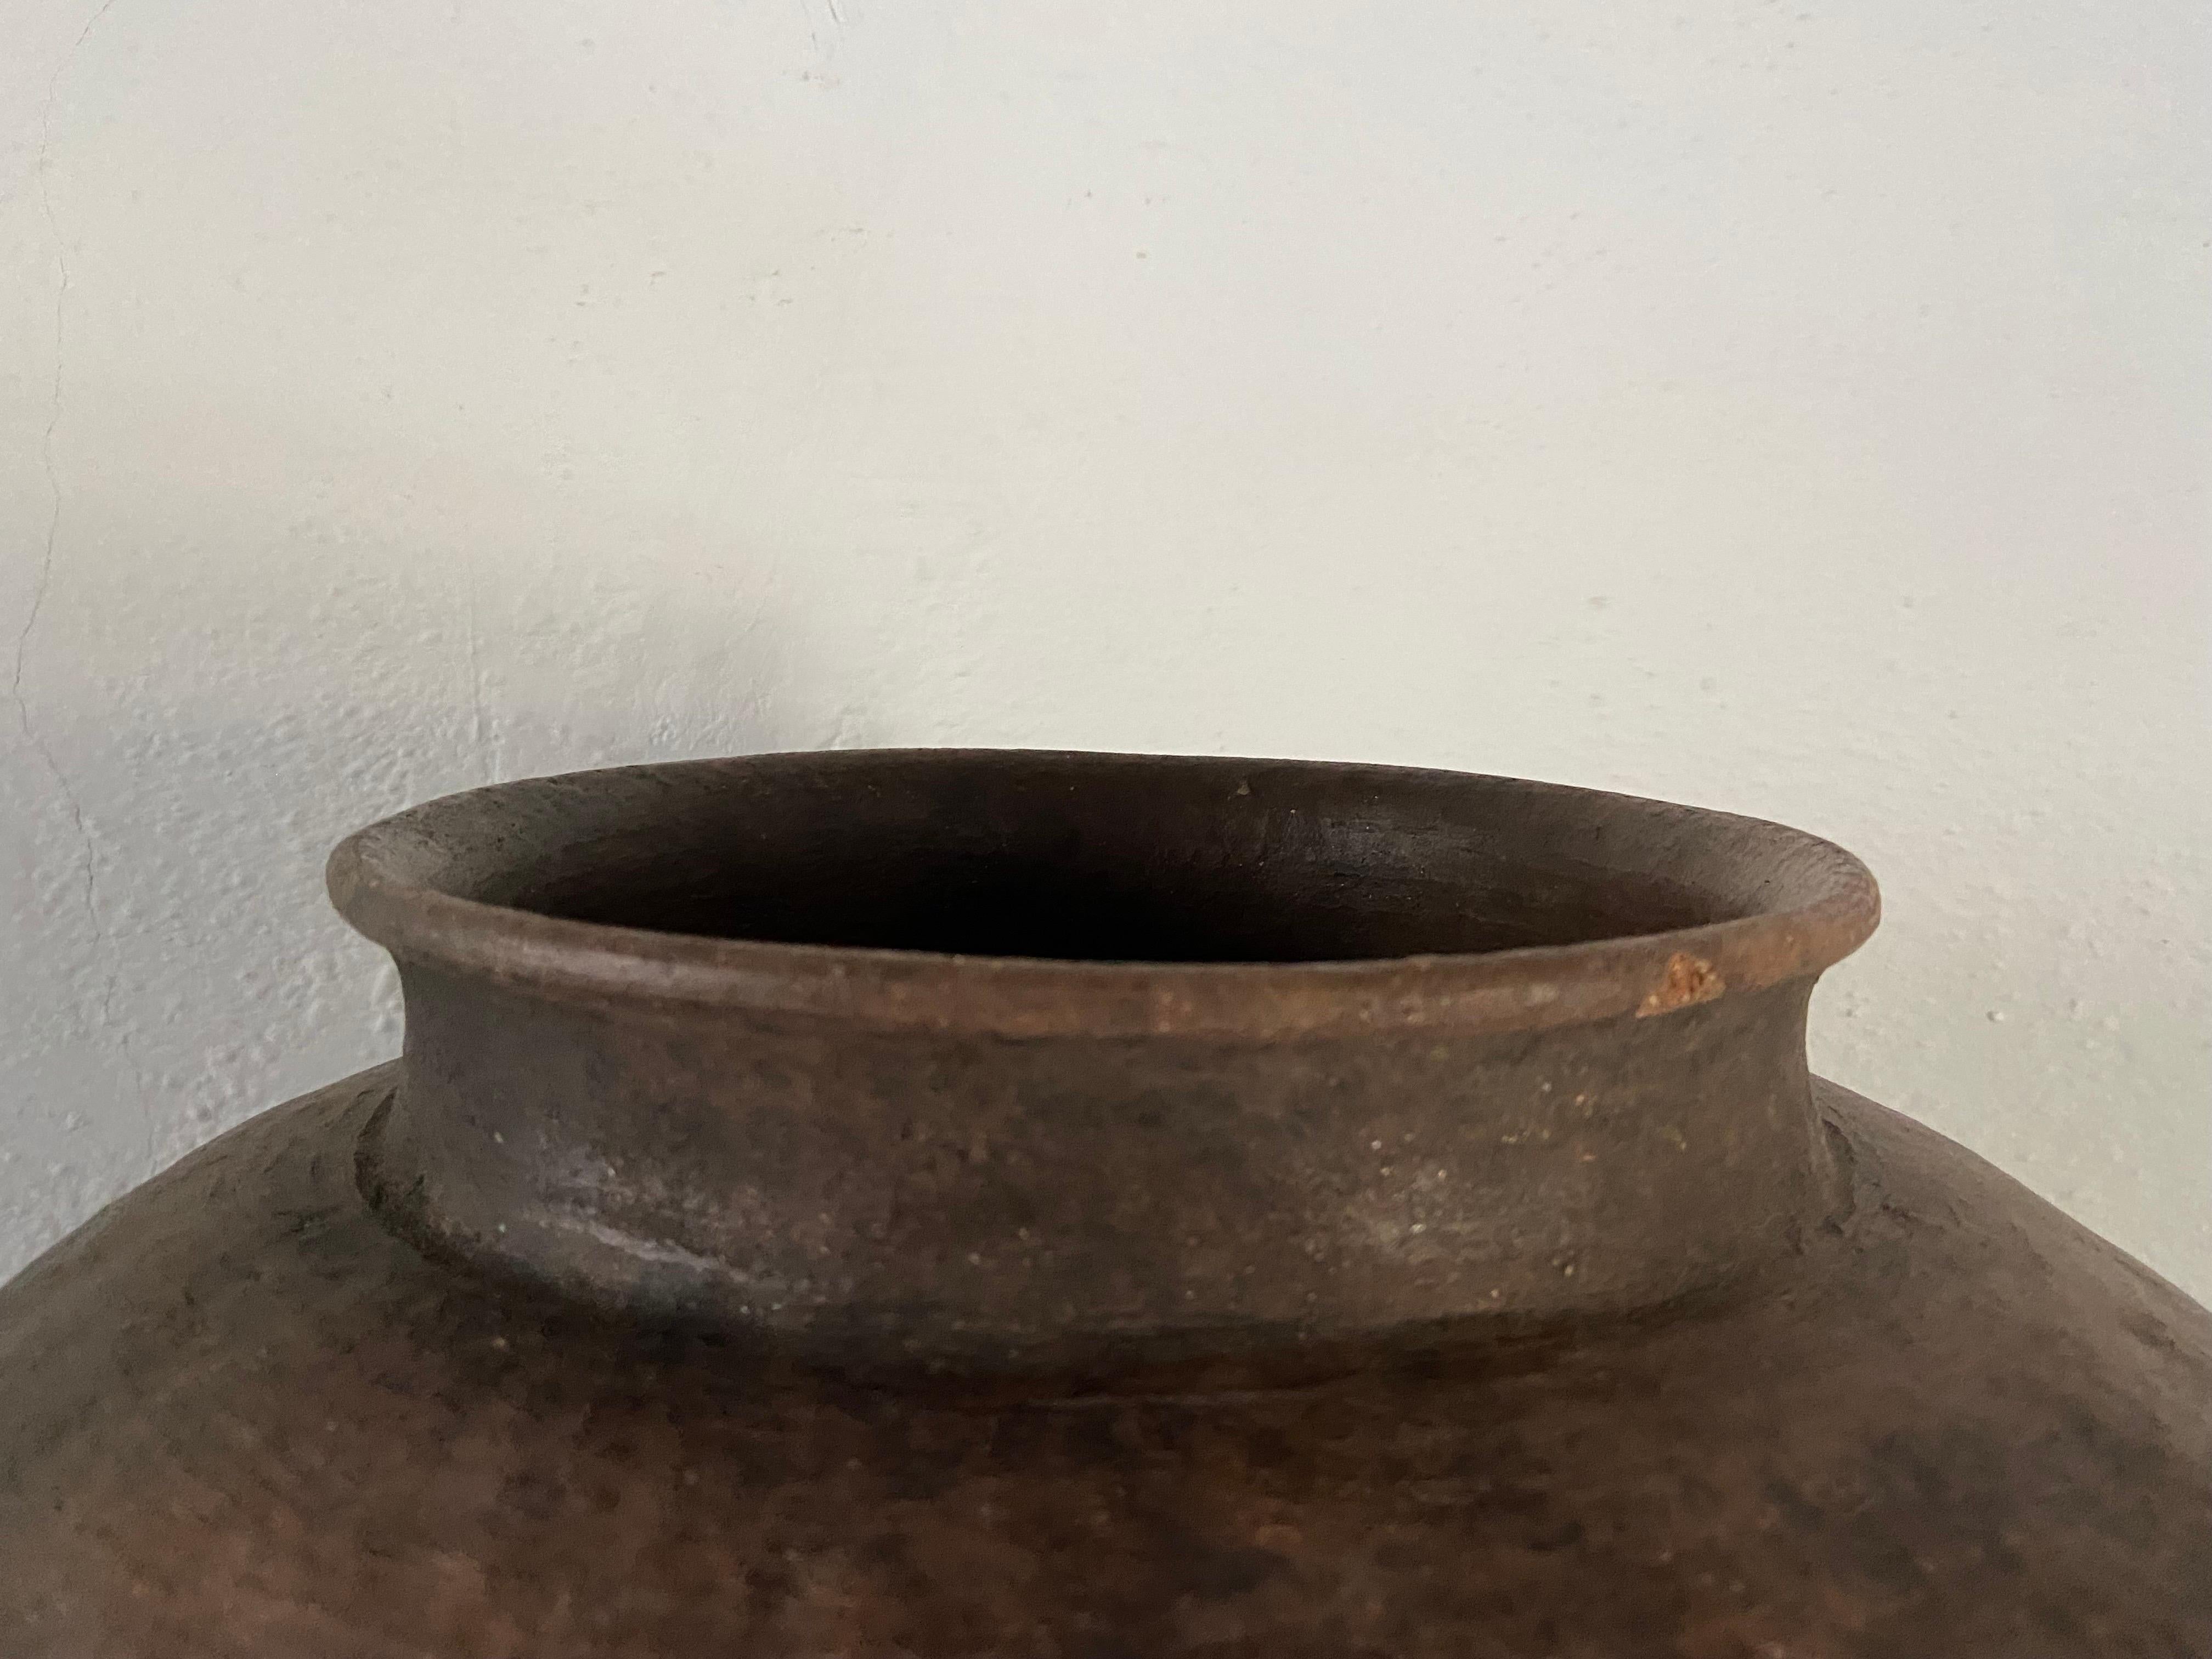 Rustic Terracotta Water Pot From The Mixteca Region Of Oaxaca, Mexico, Circa 1960´s